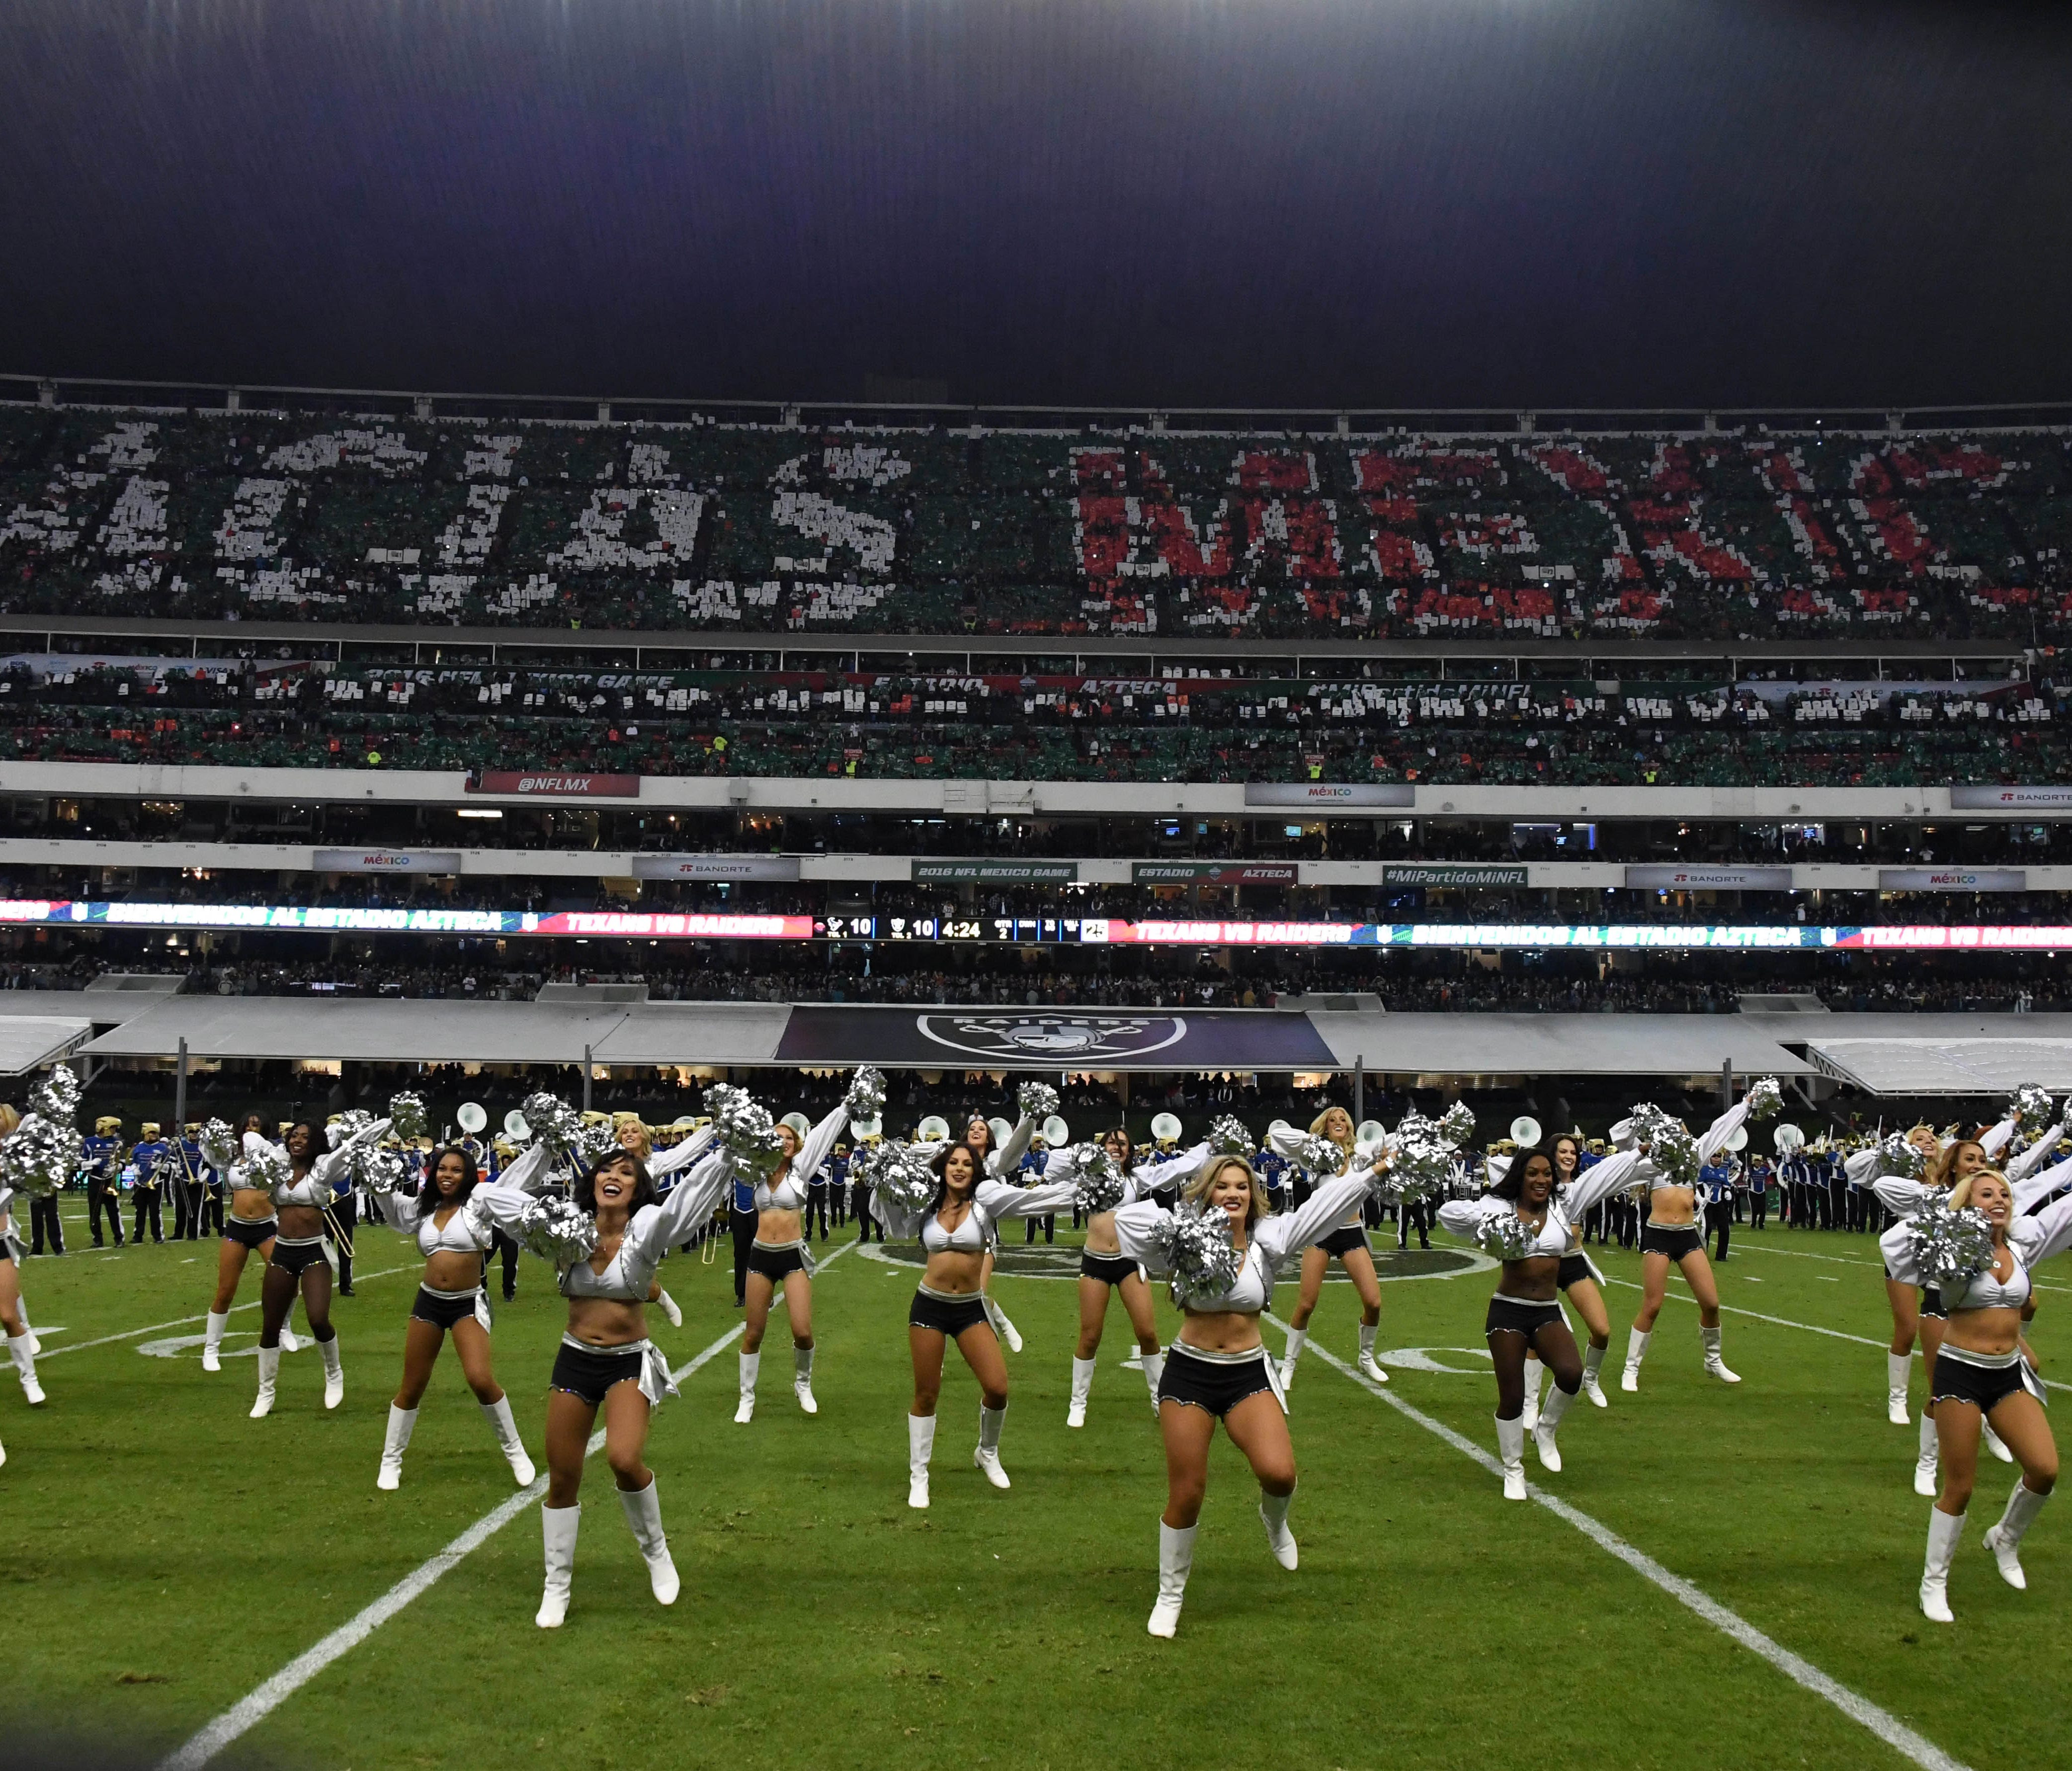 Oakland Raiders raiderette cheerleaders perform during a NFL International Series game against the Houston Texans at Estadio Azteca.